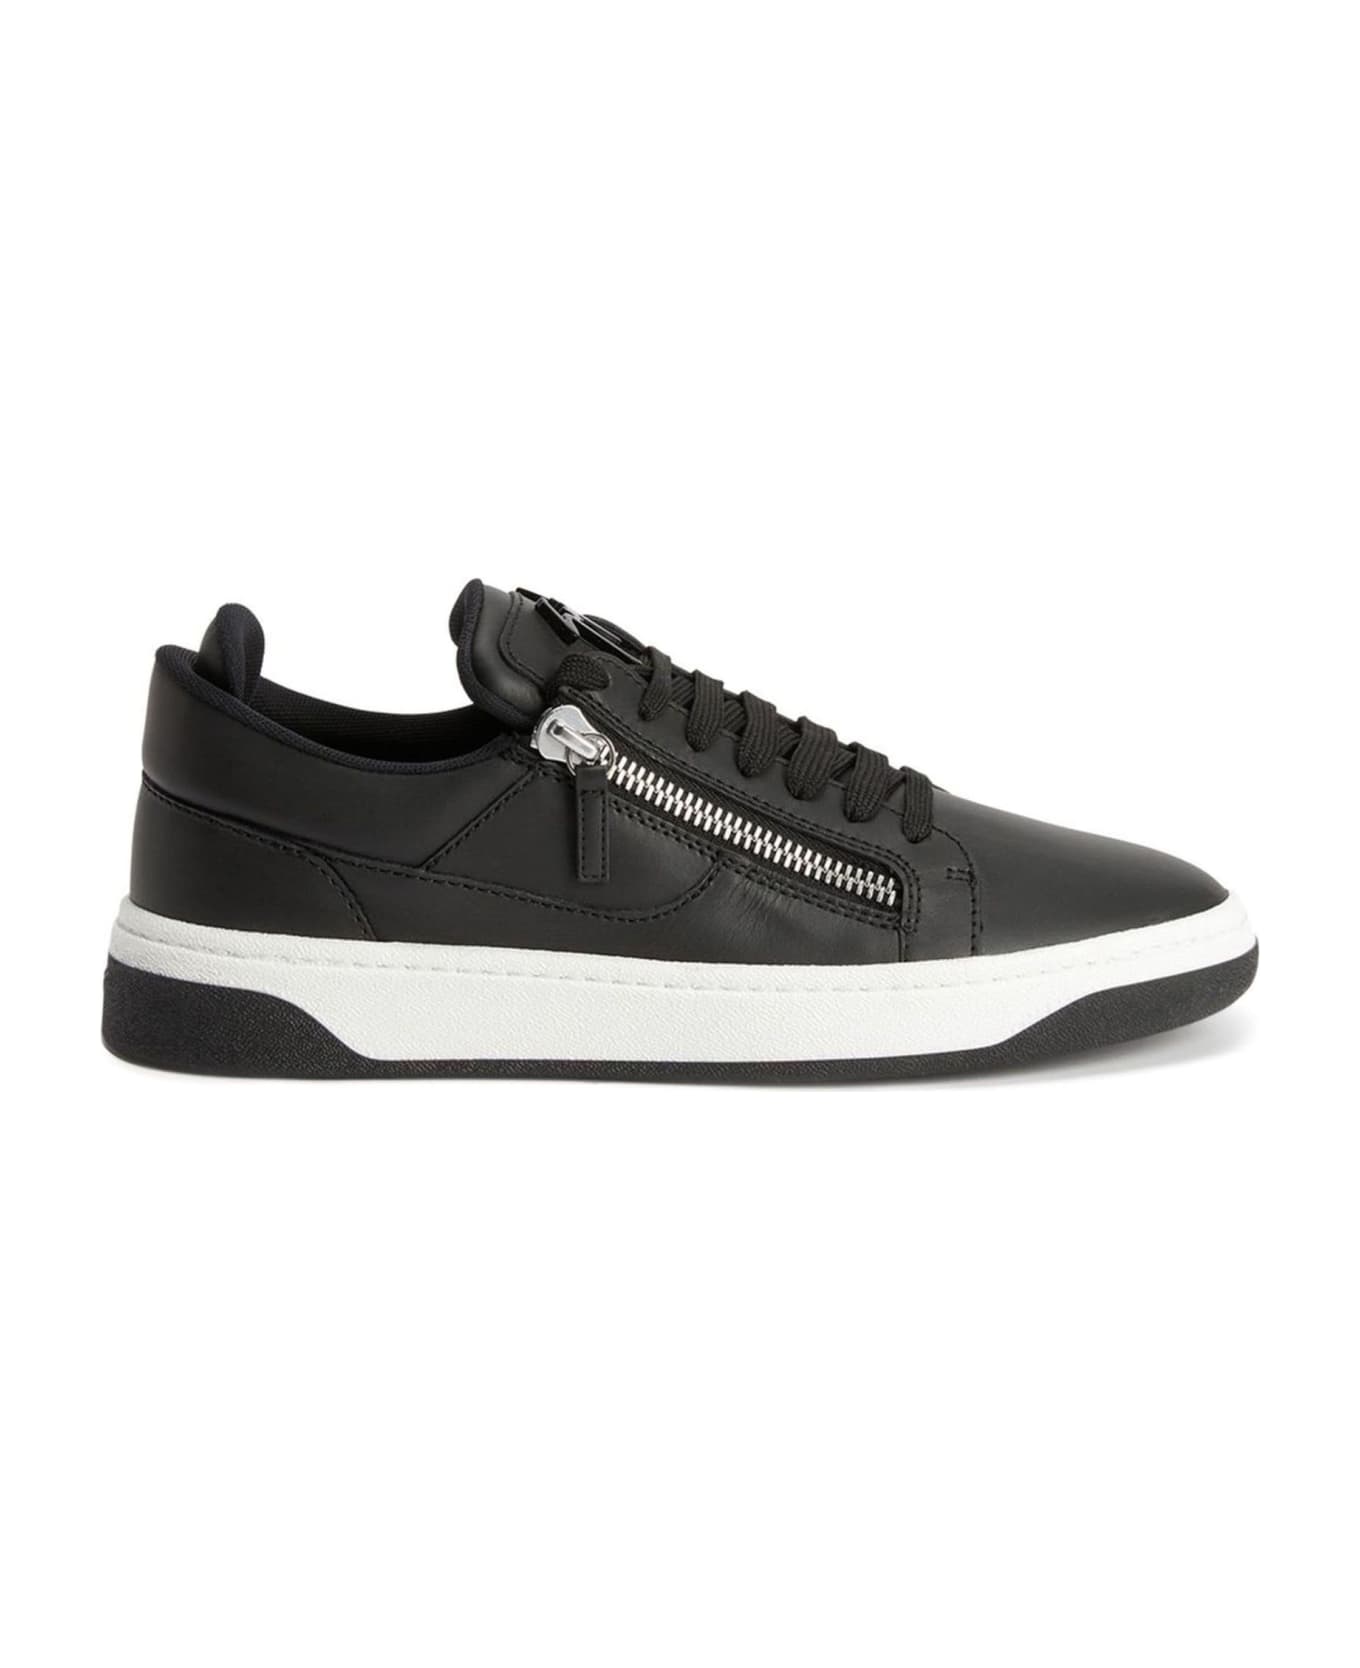 Giuseppe Zanotti Black Leather Sneaker - Black